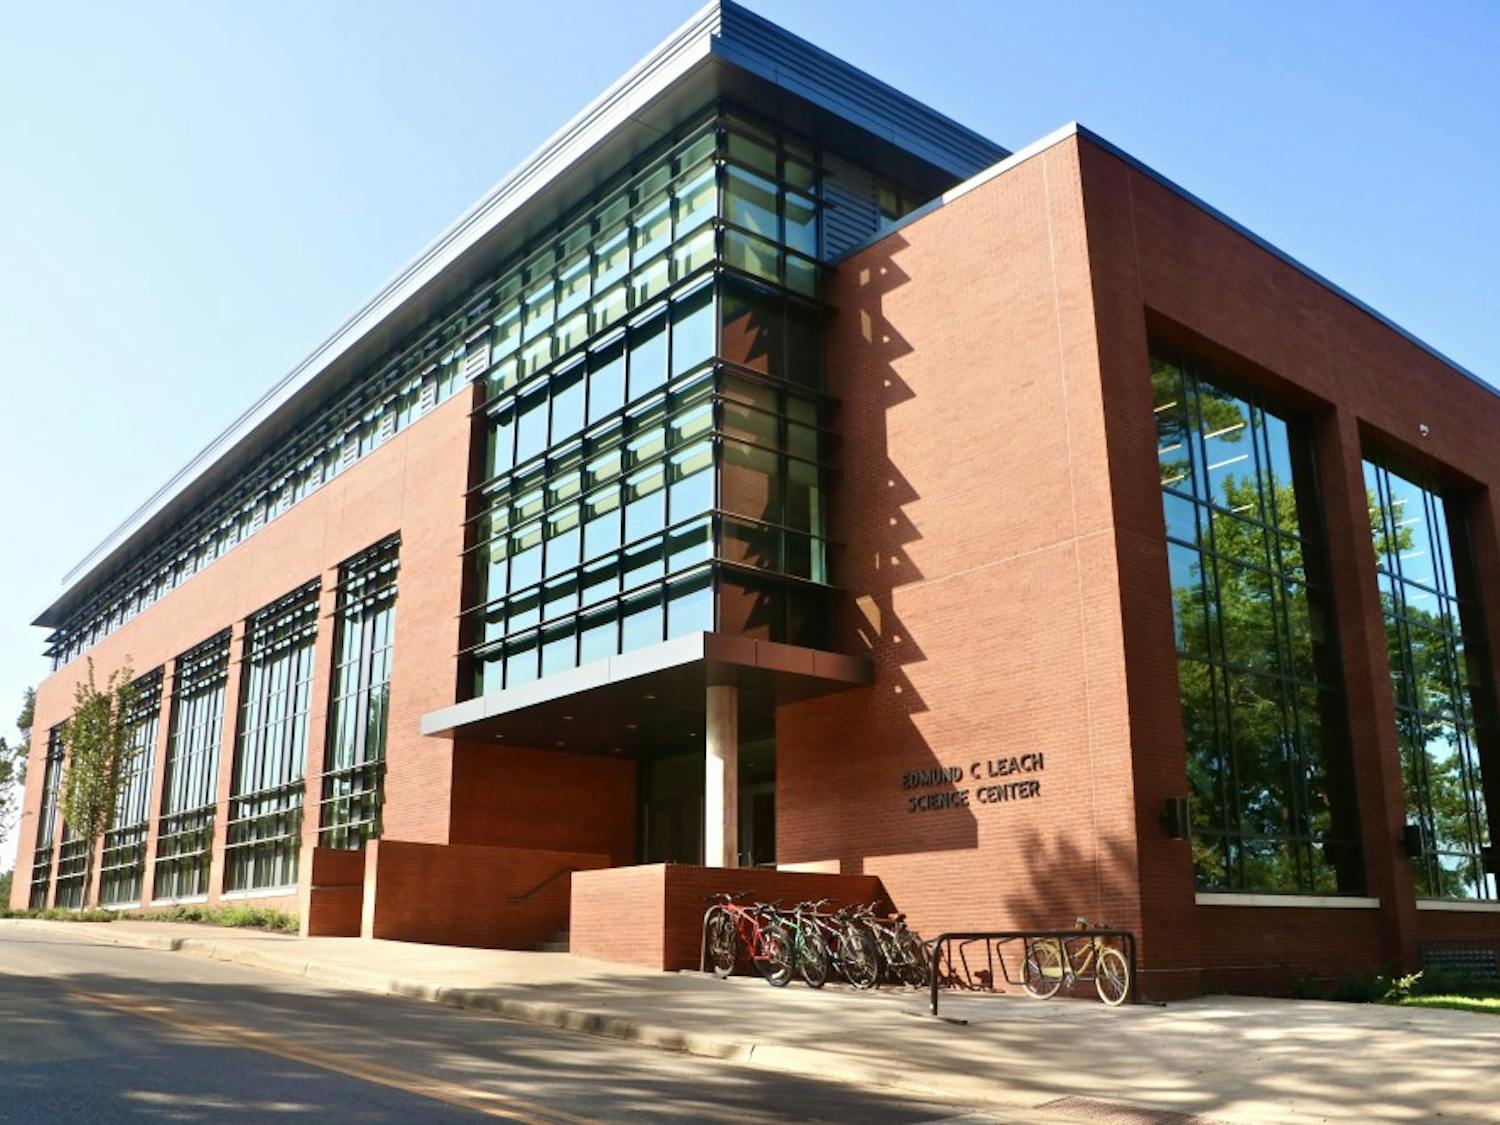 Leach Science Center